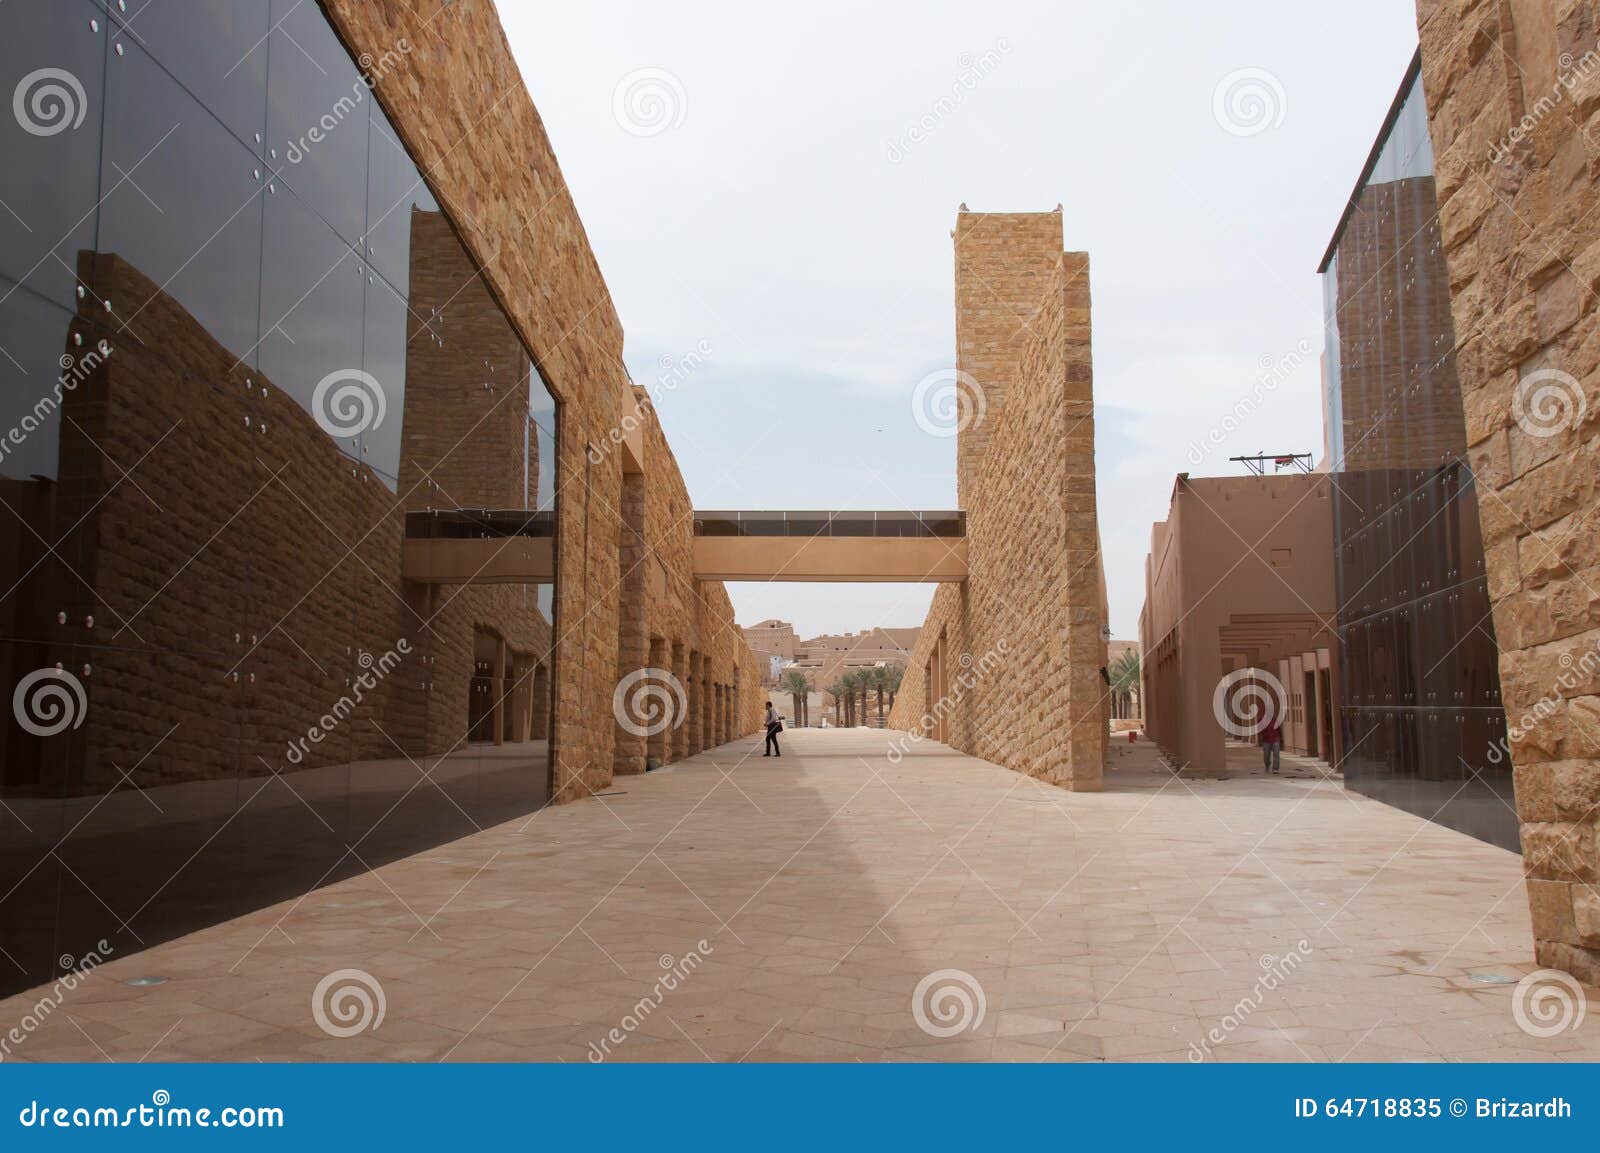 old at-turaif district near ad diriyah, saudi arabia